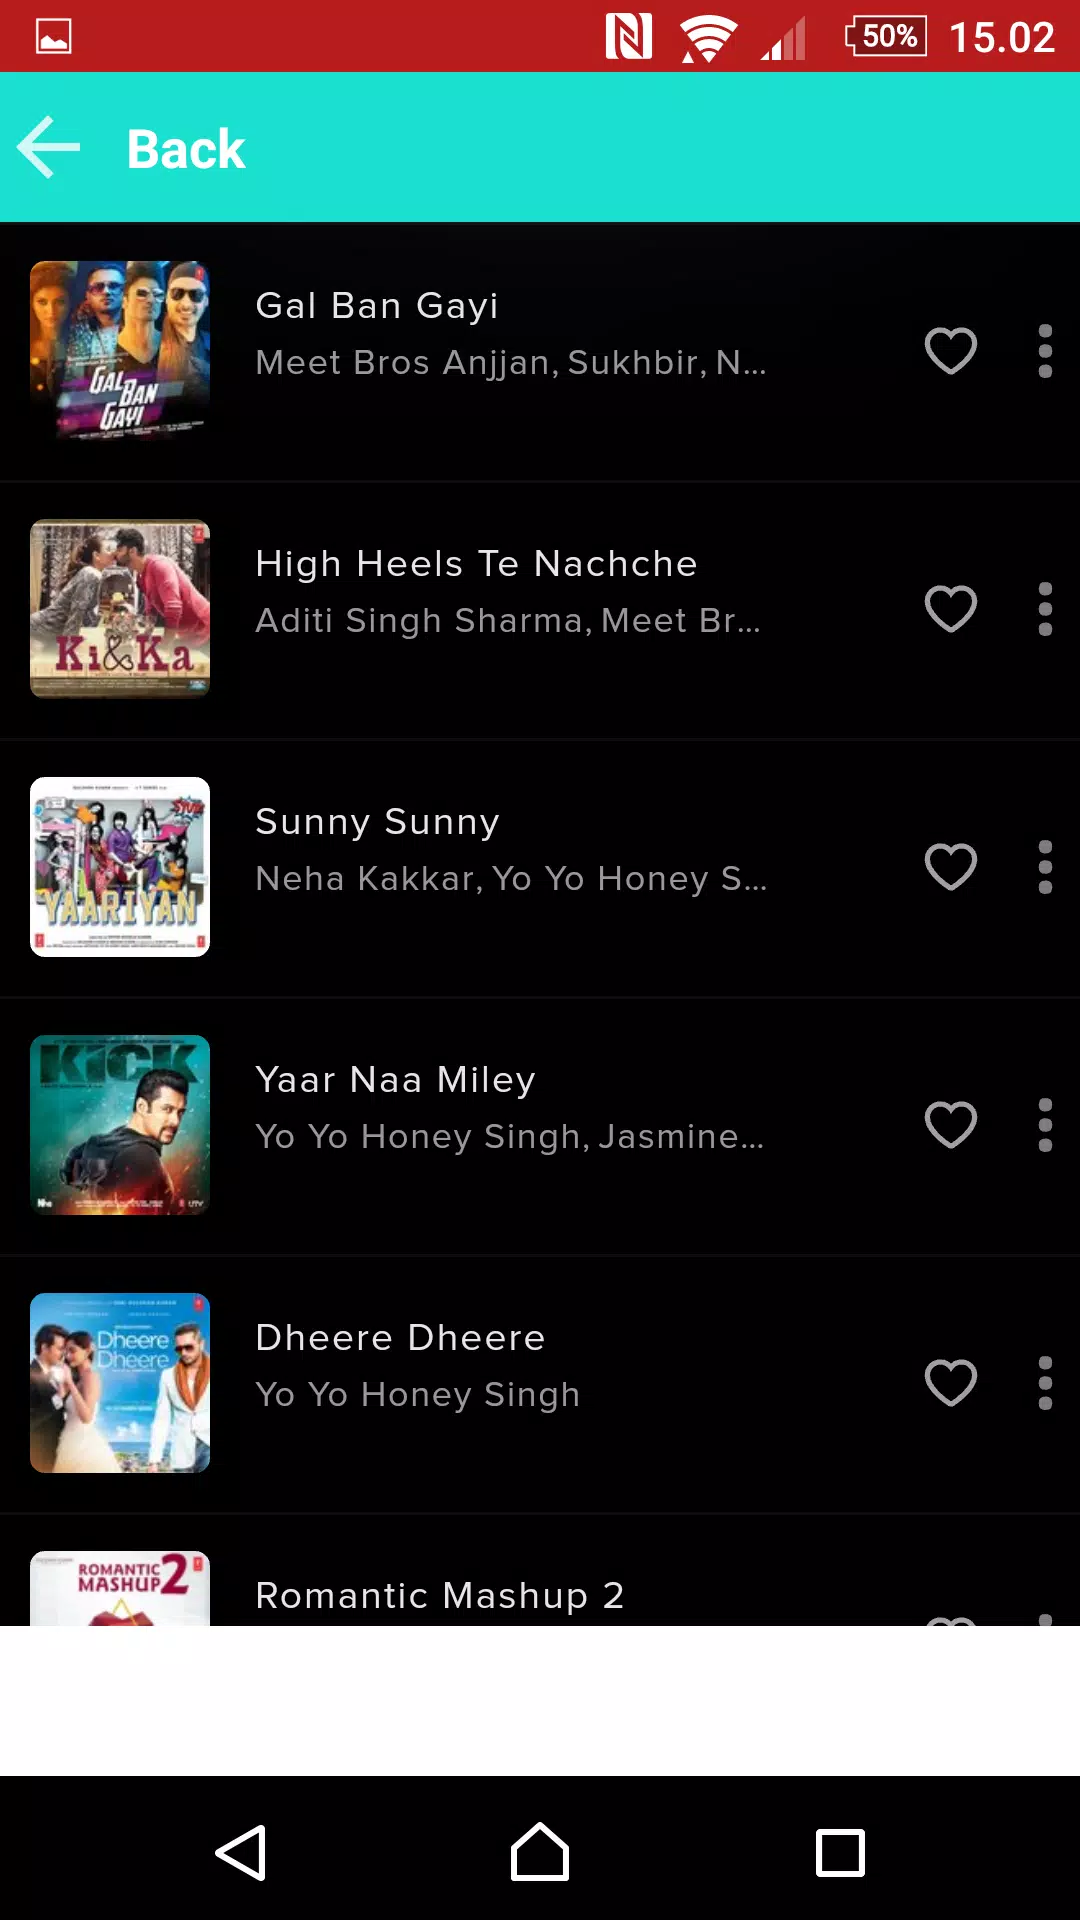 Best Album Yo Yo Honey Singh Mp3 for Android - APK Download